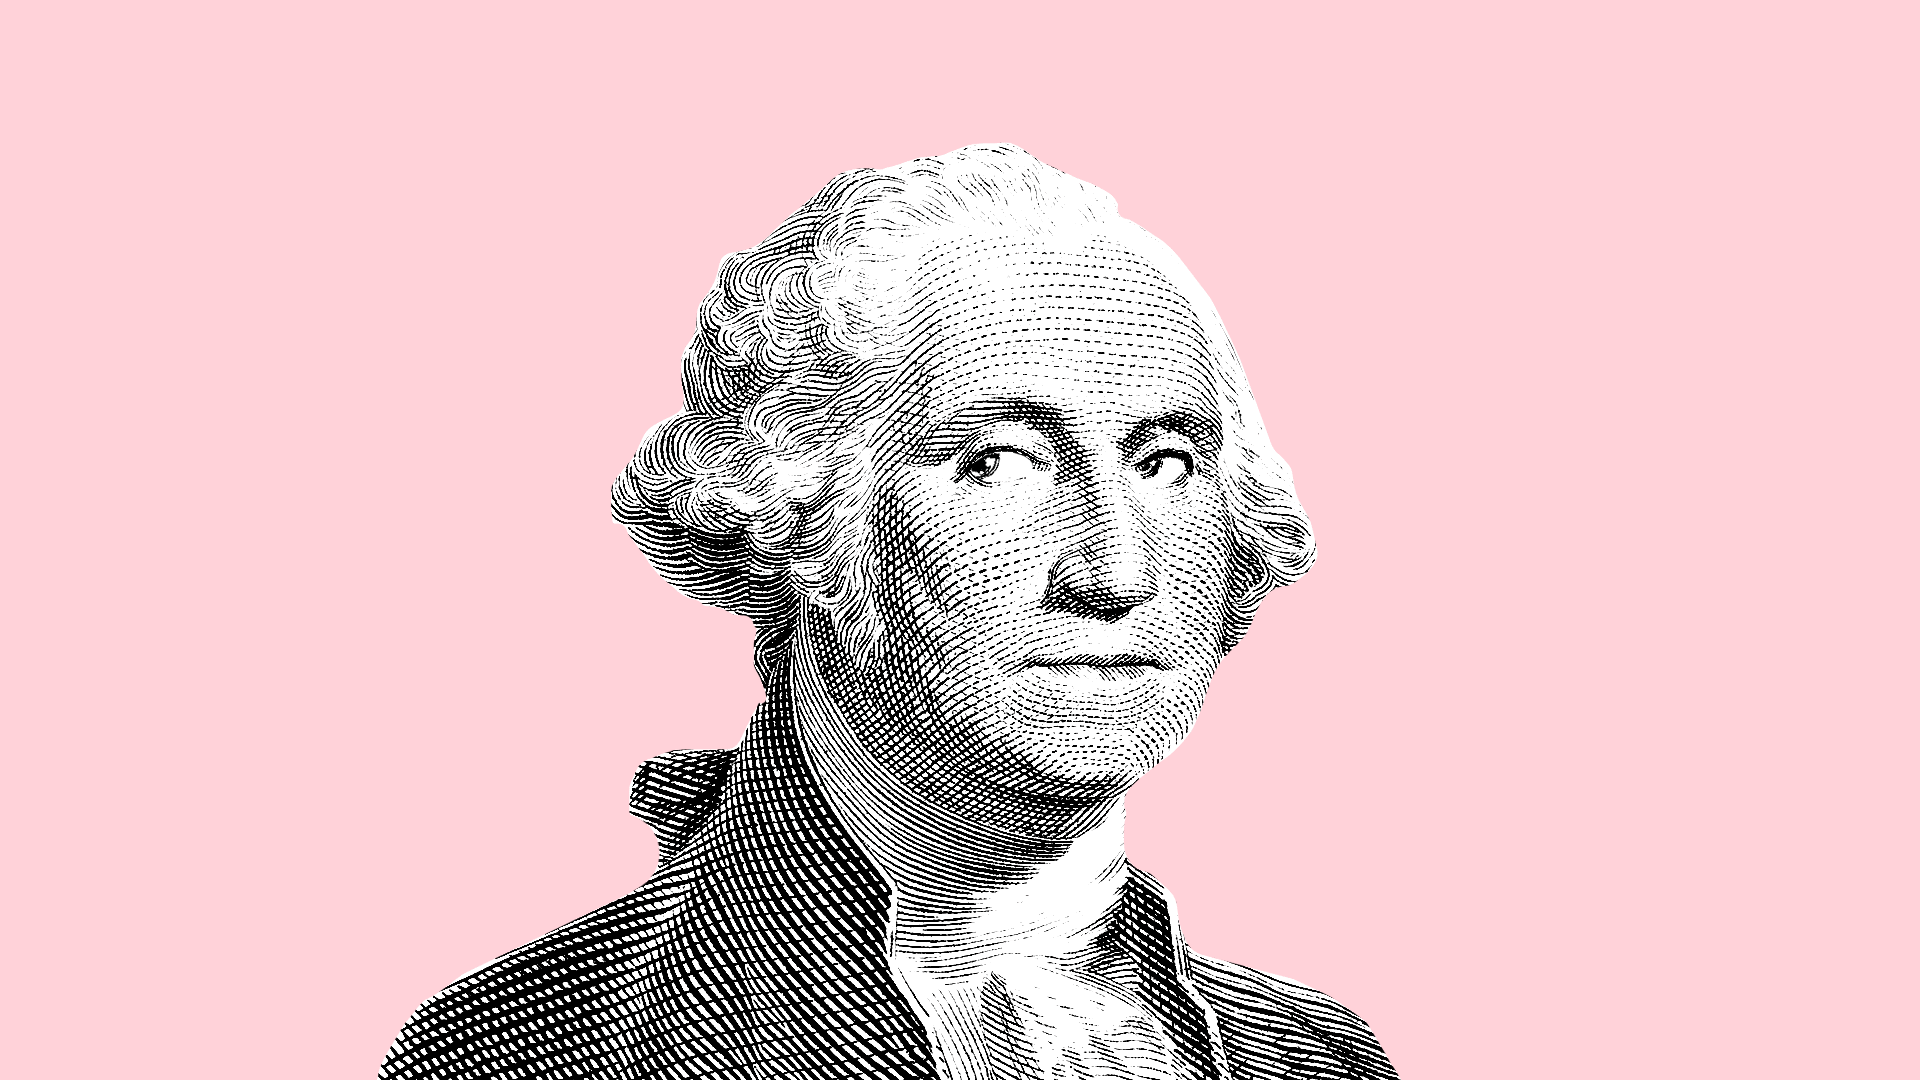 An illustration of George Washington.